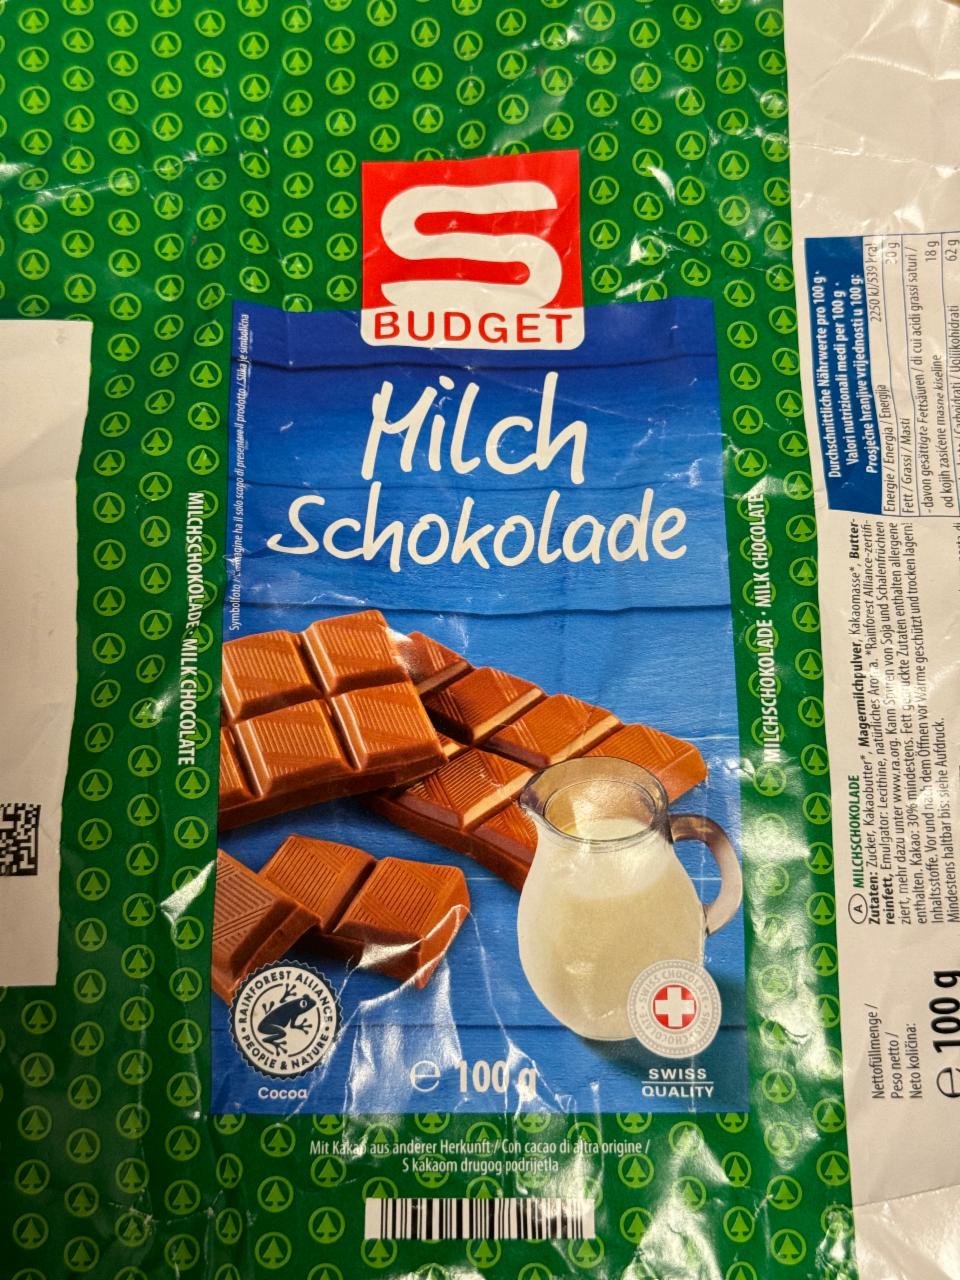 Фото - Milch Schokolade S Budget